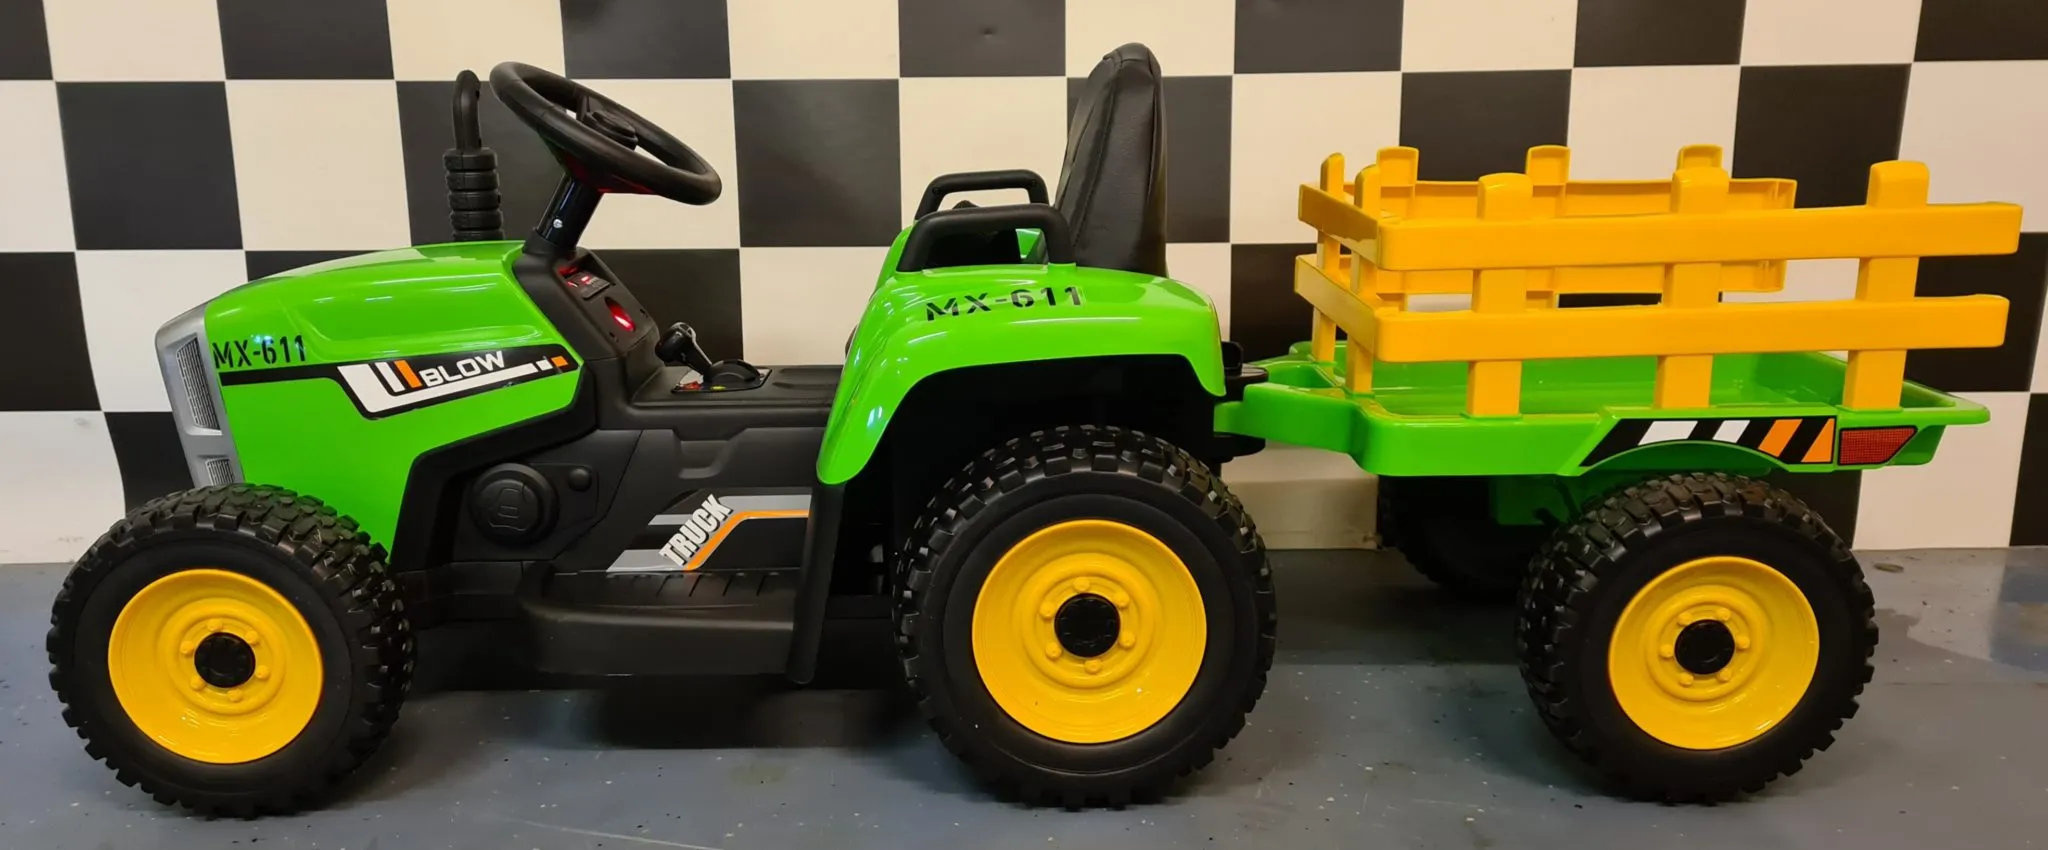 Tractor Eléctrico Infantil Con Remolque XMX611, 12v, Mando RC, Color verde- KI4-XMX611GREEN